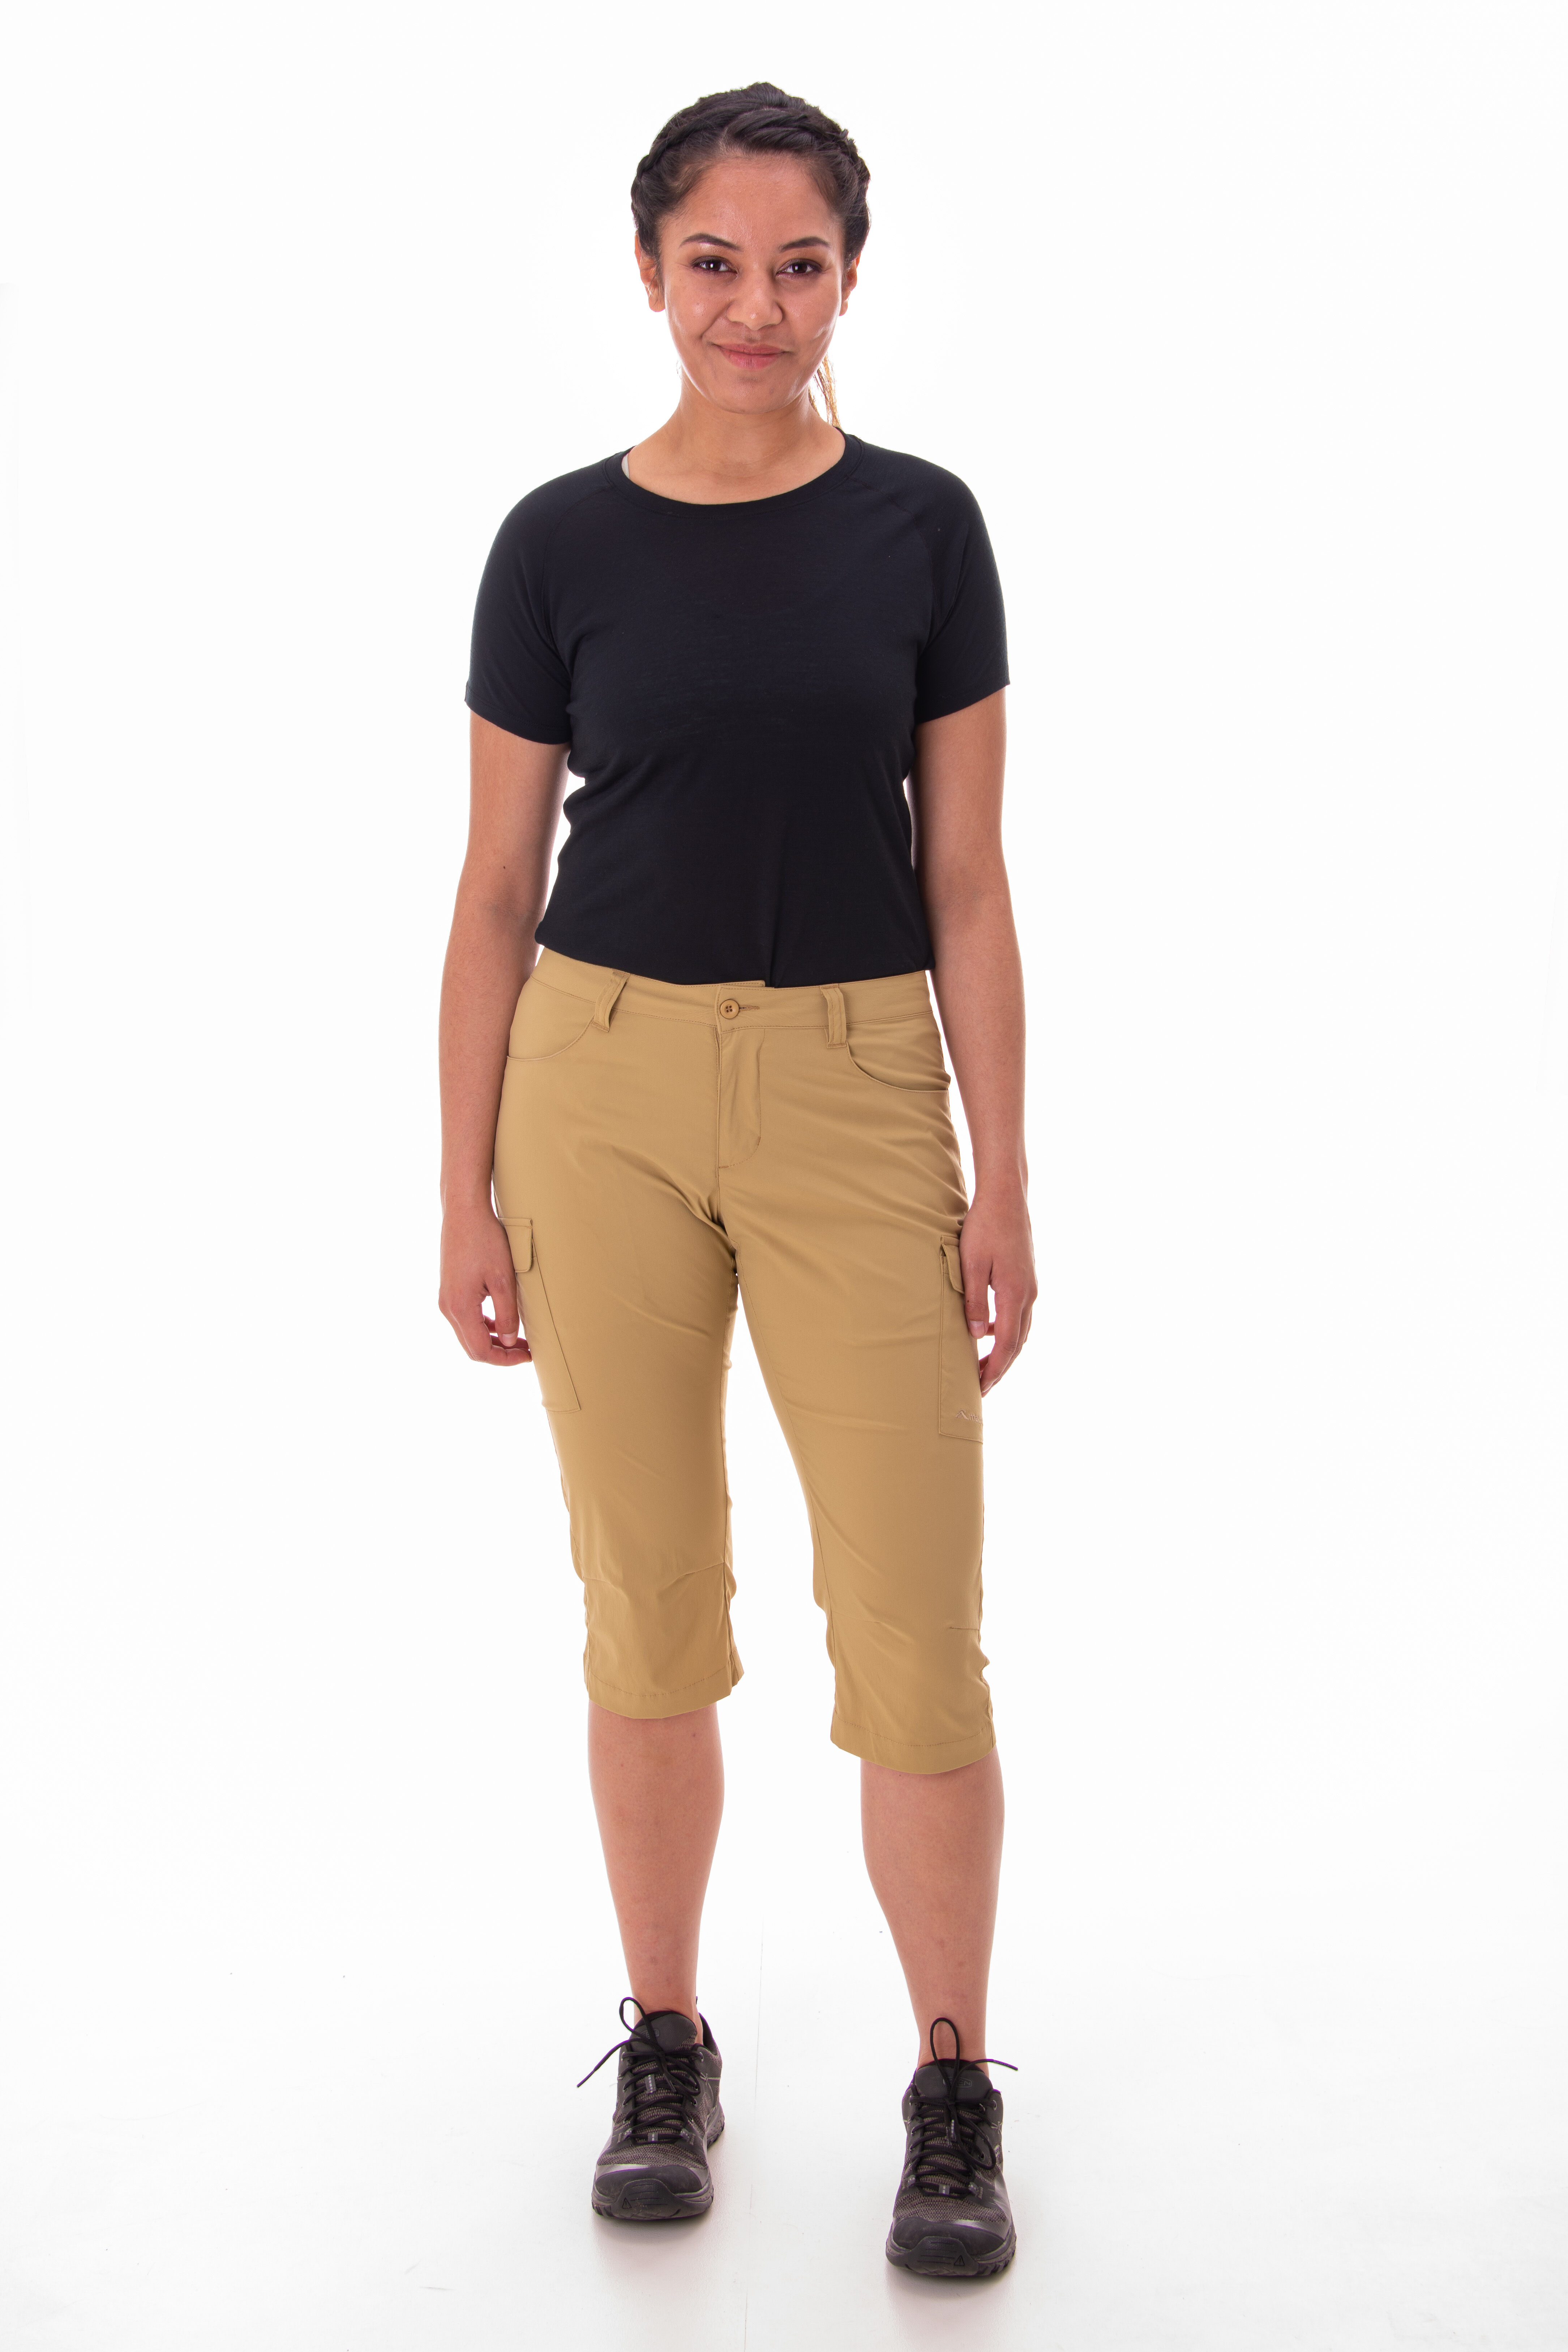 Women Drawstring Sports Cargo Three Quarter 3/4 Length Crop Pants Capri  Trousers | eBay